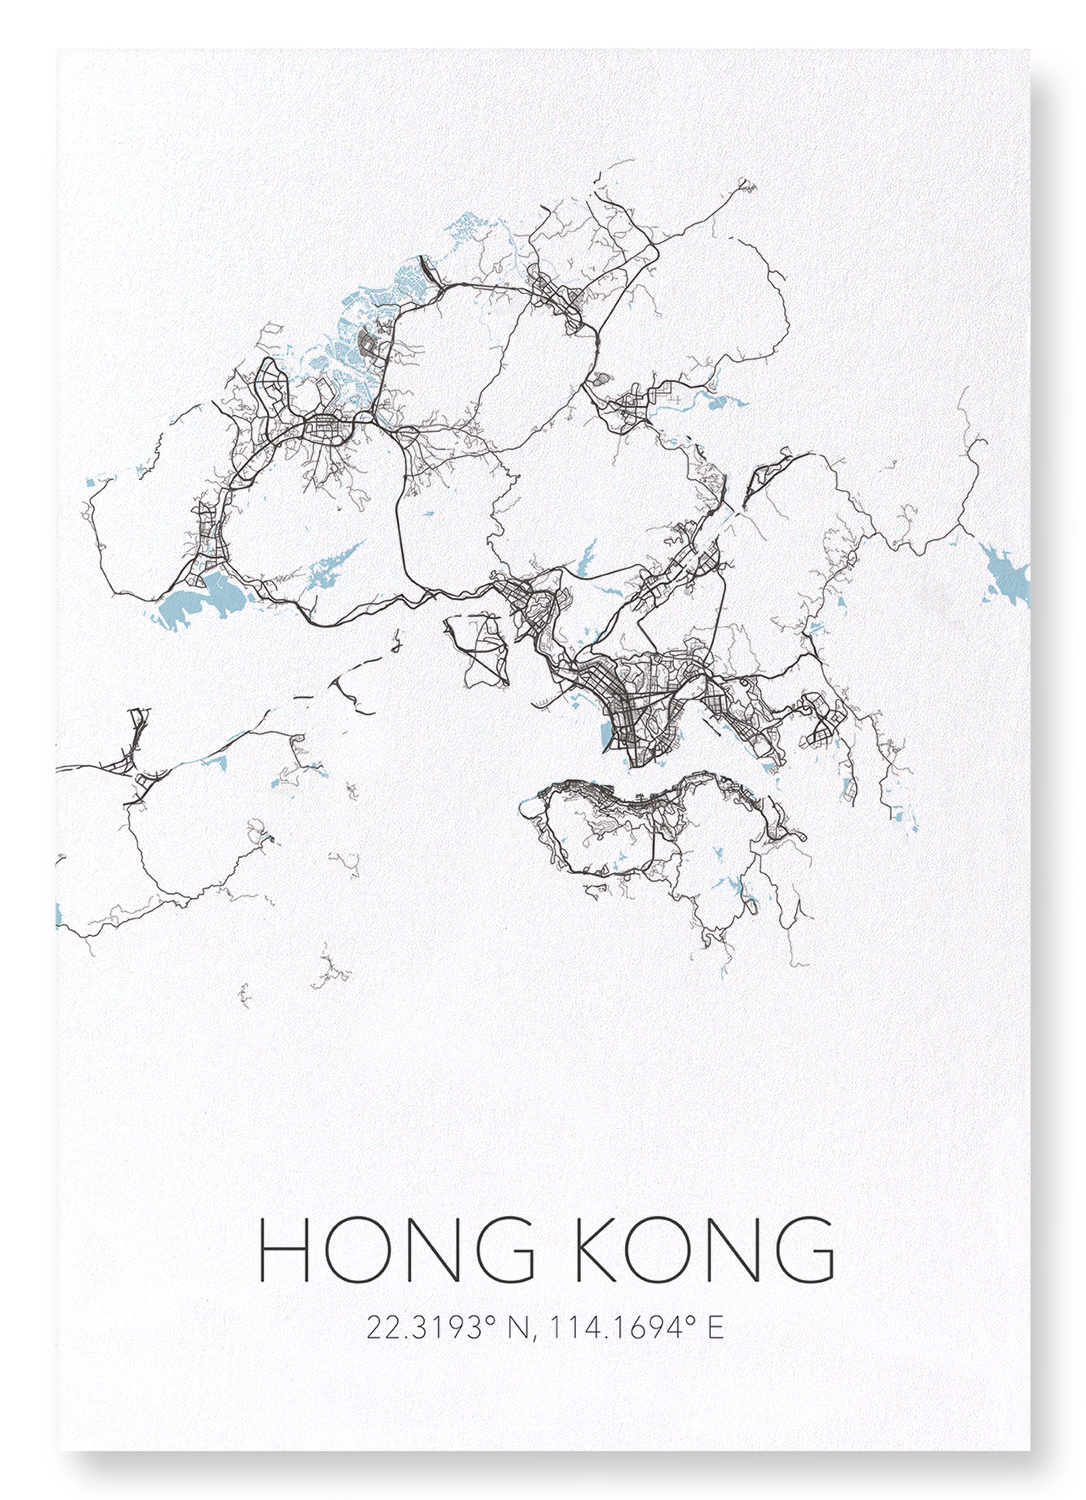 HONG KONG CUTOUT: Map Cutout Art Print